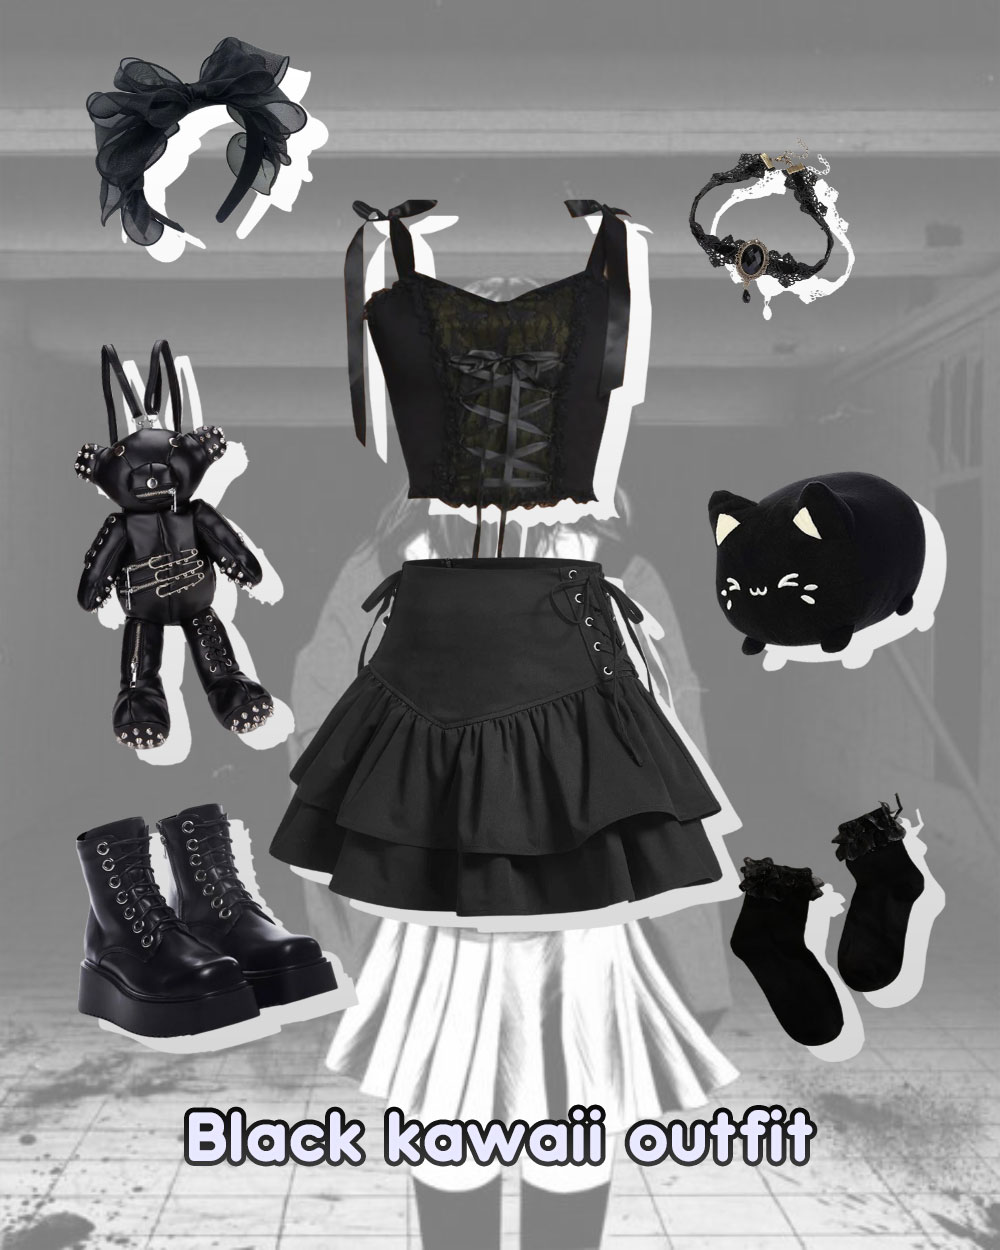 black kawaii outfit inspiration - corset top, miniskirt, bow headband, chocker, platform boots, laced socks, teddy backpack, cat plush